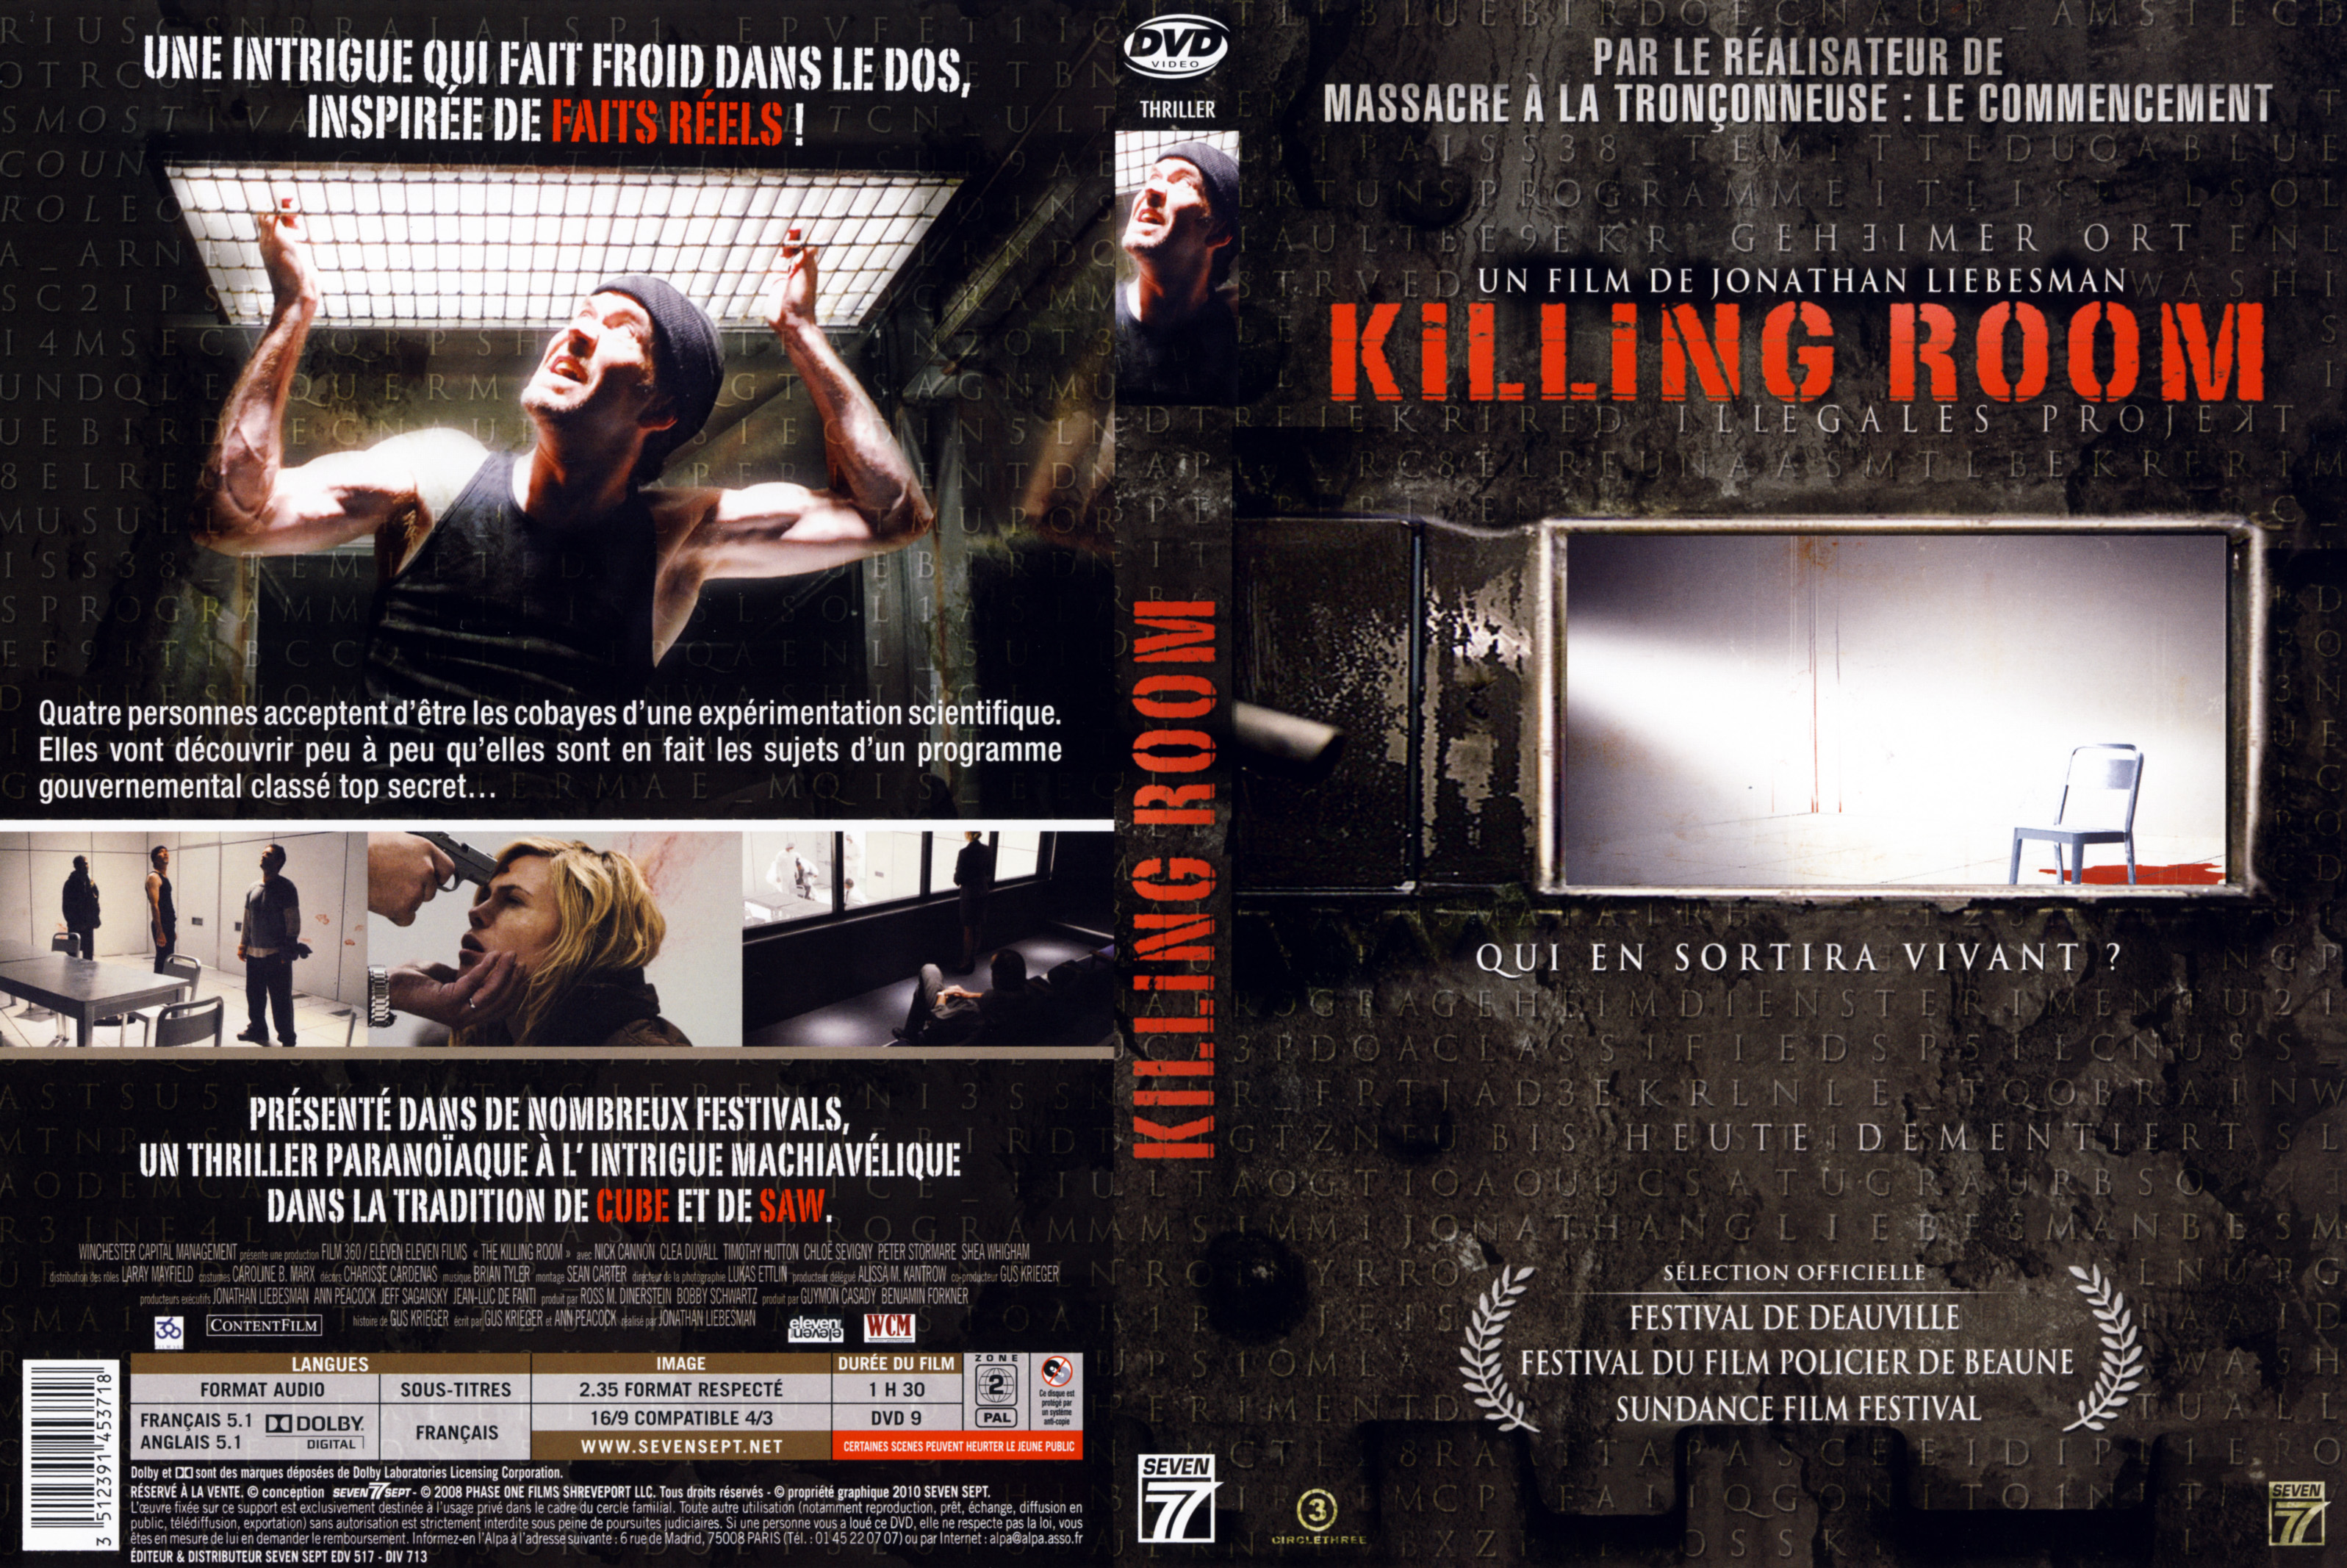 Jaquette DVD Killing room